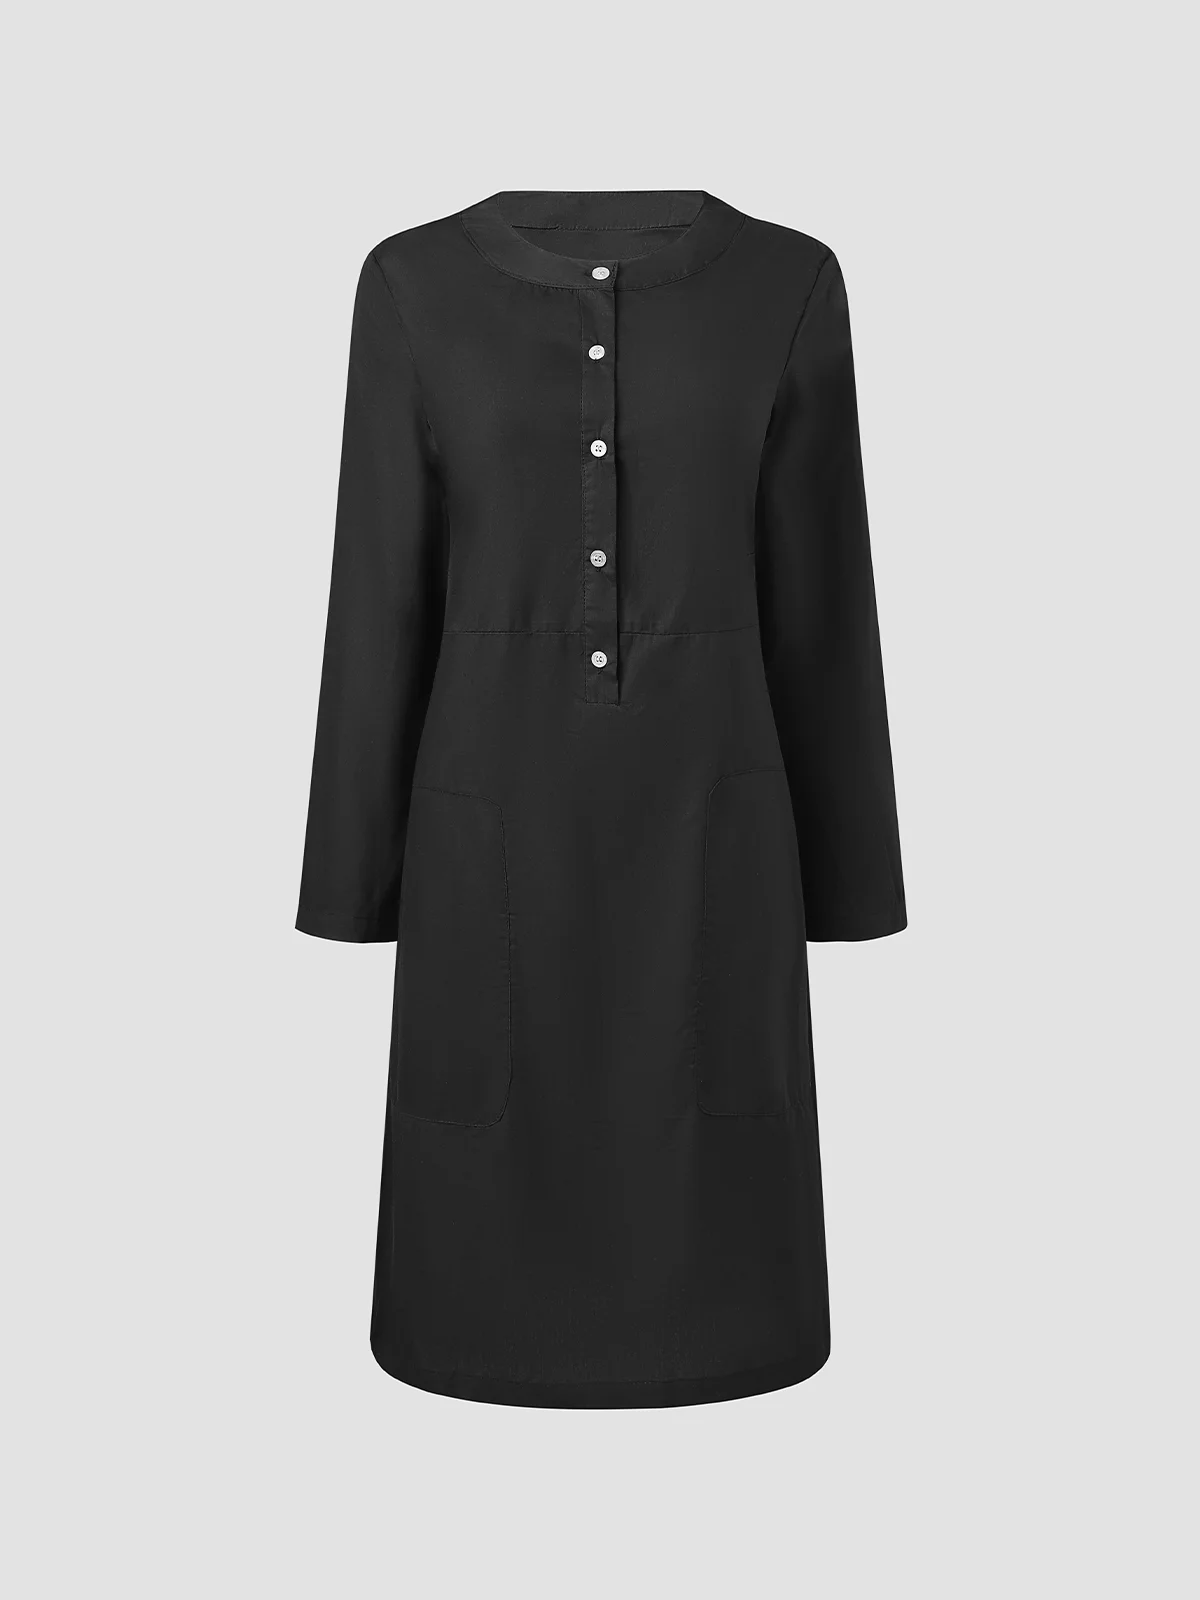 Womne's Midi Dress Buttoned Down Pockets Dress